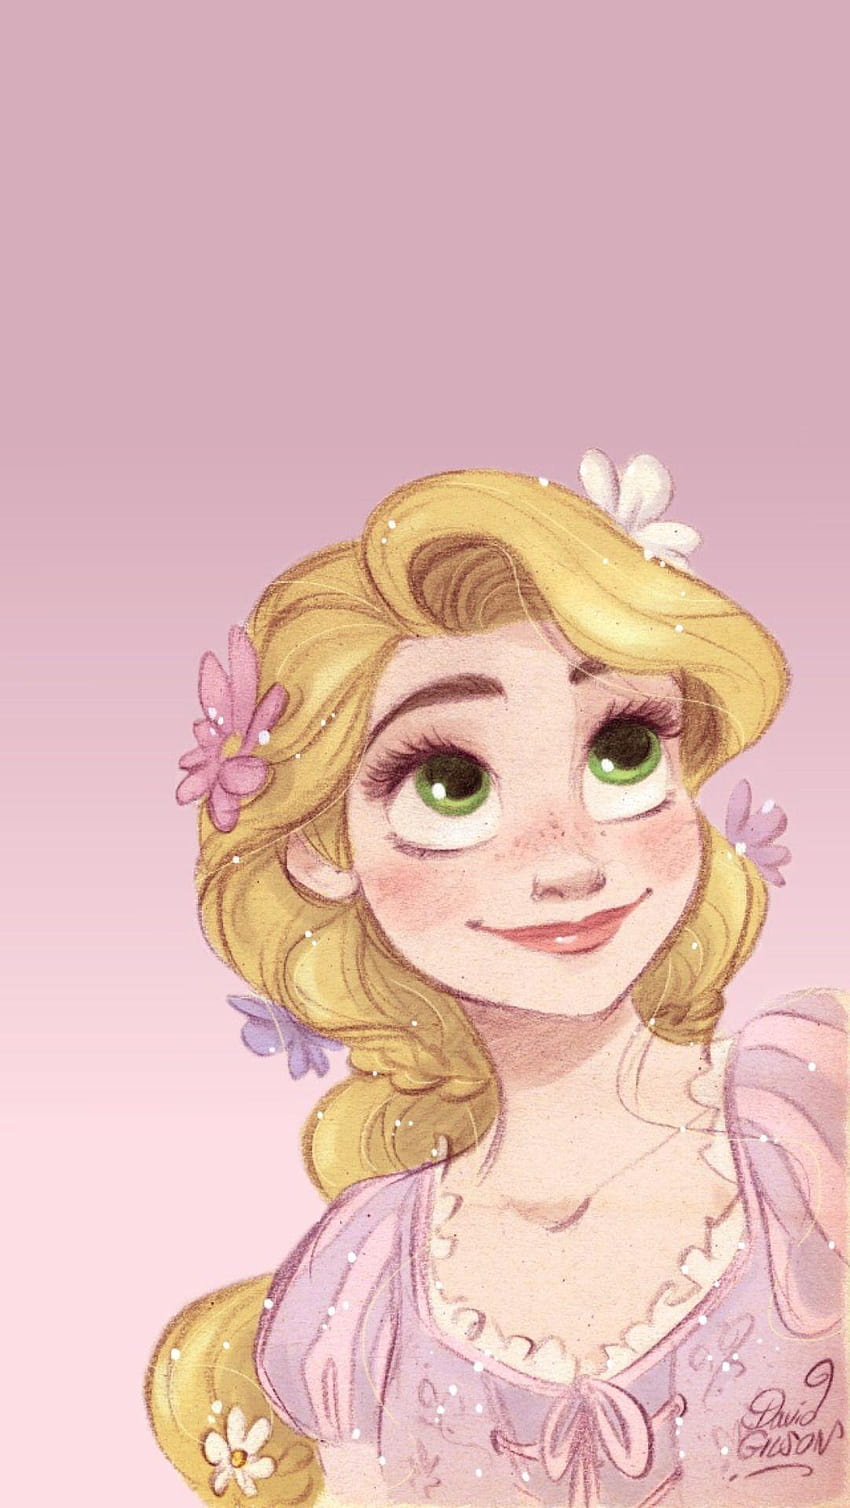 Disneyledolls: “// I made some Rapunzel from the HD phone wallpaper ...